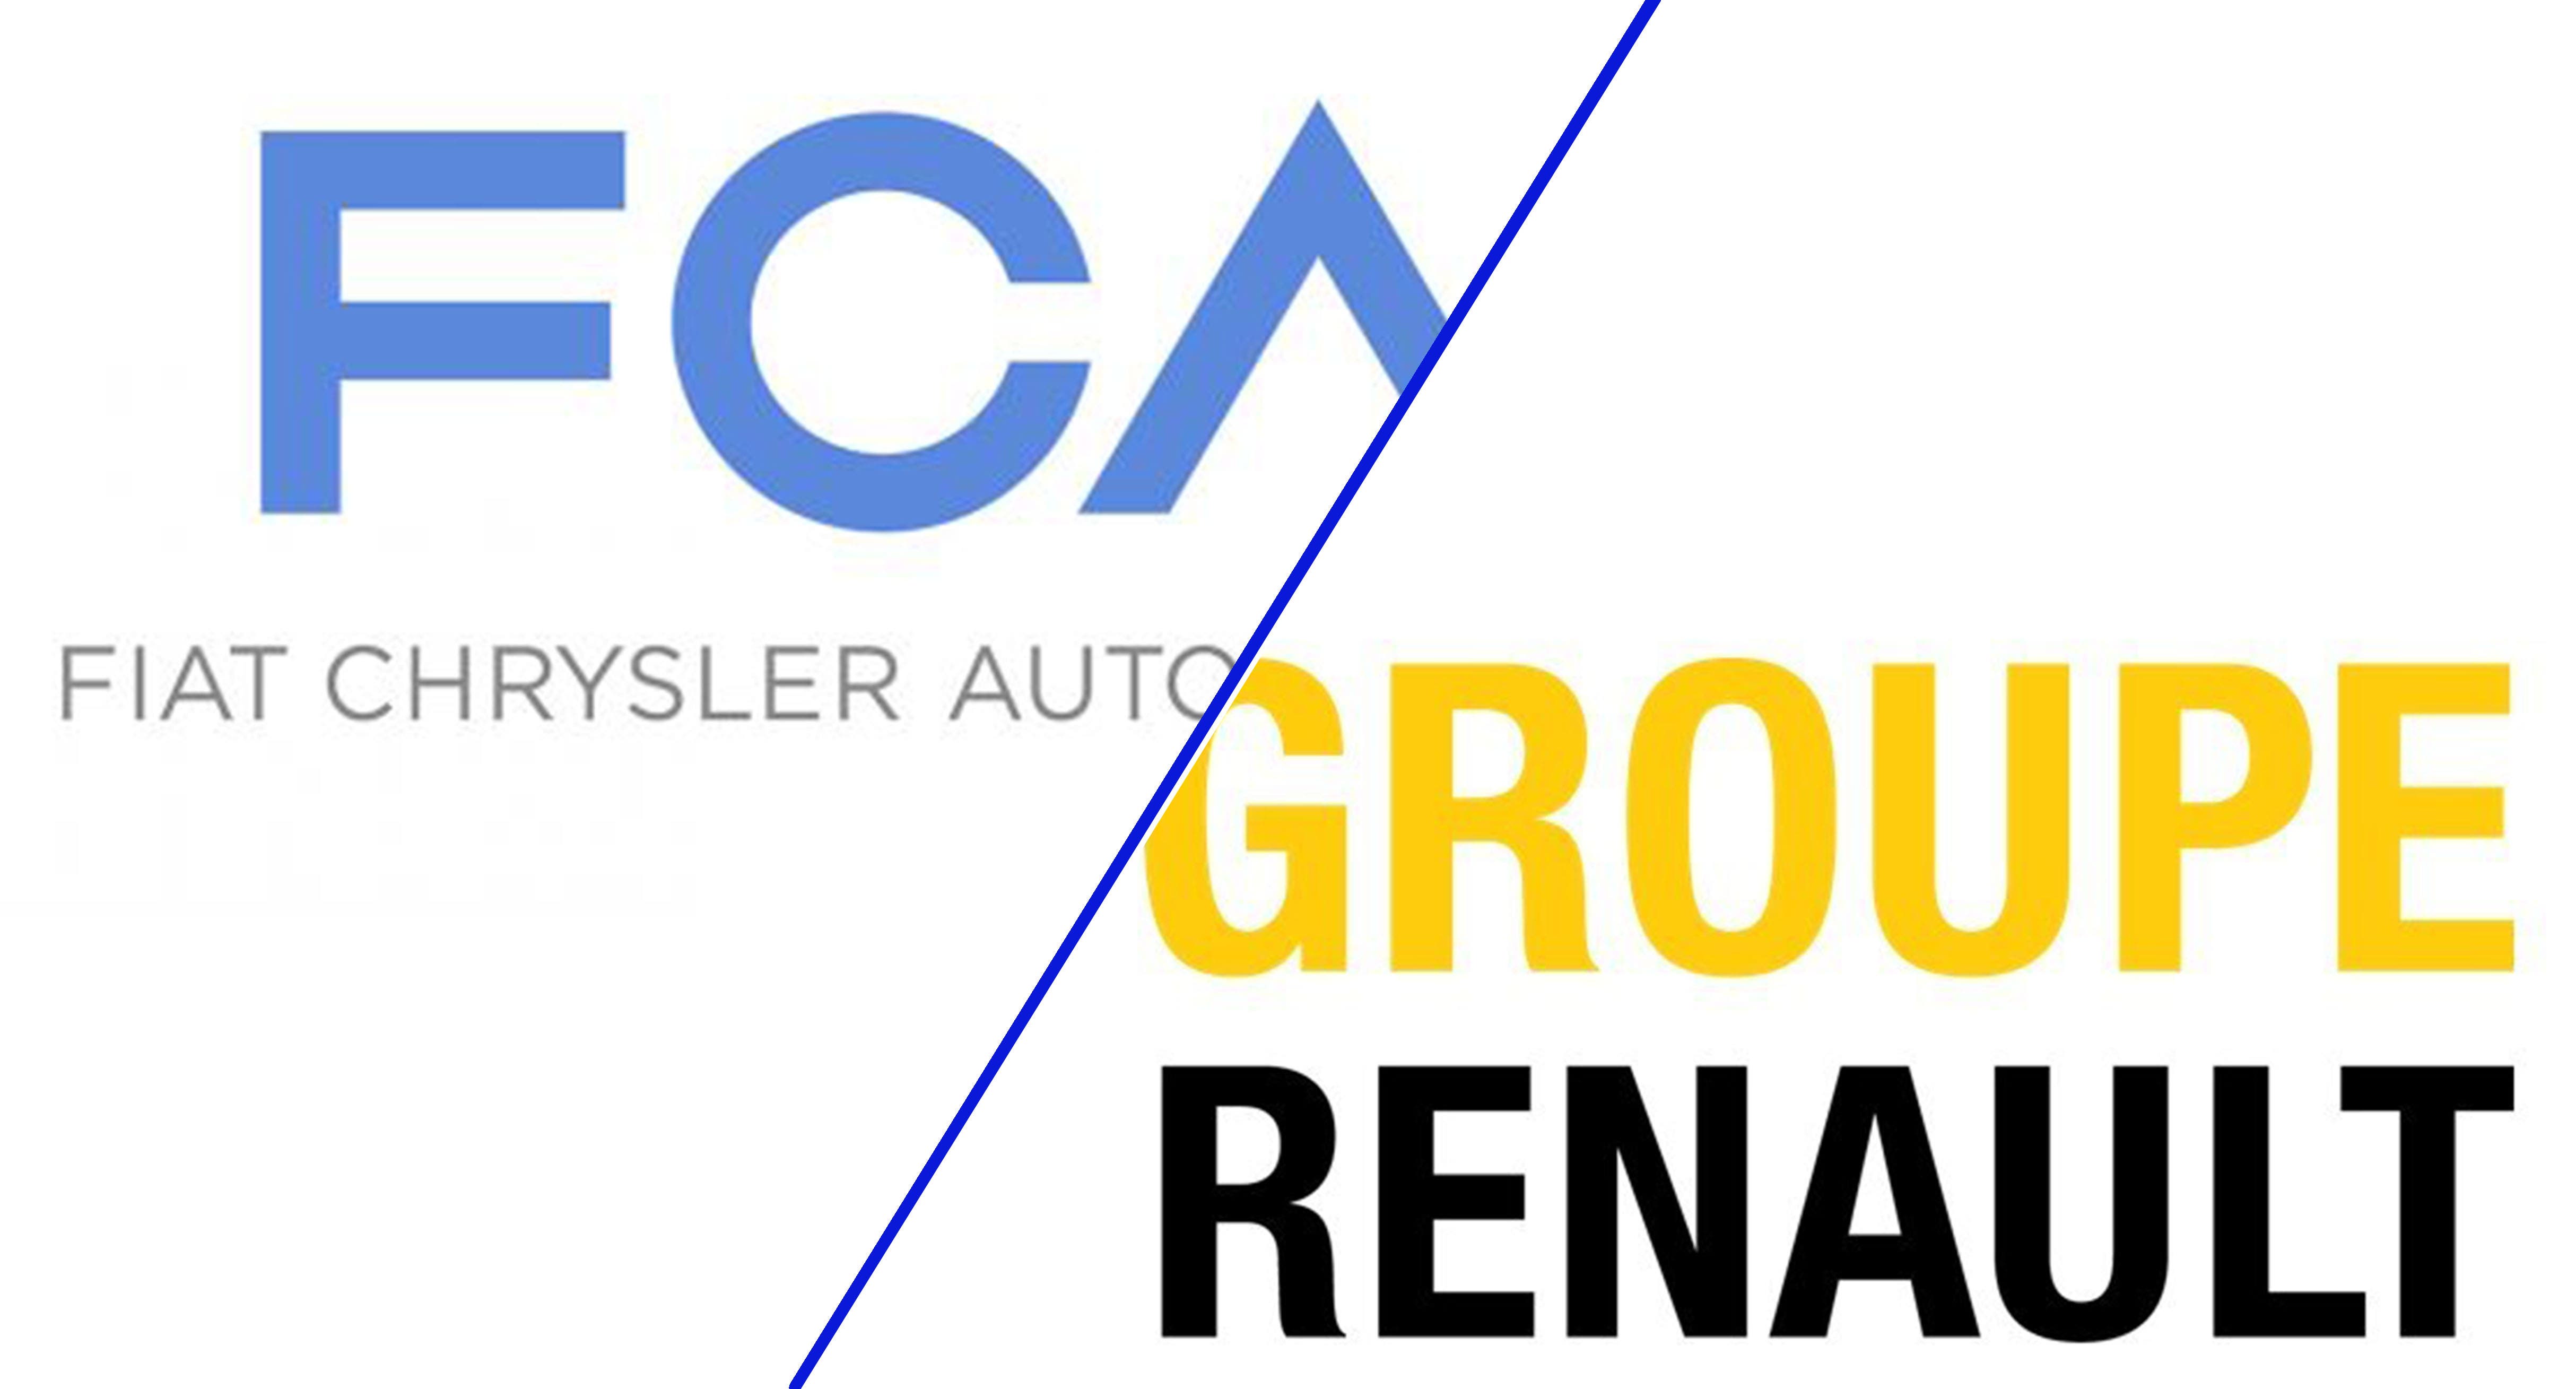 Fusione FCA Renault 2019